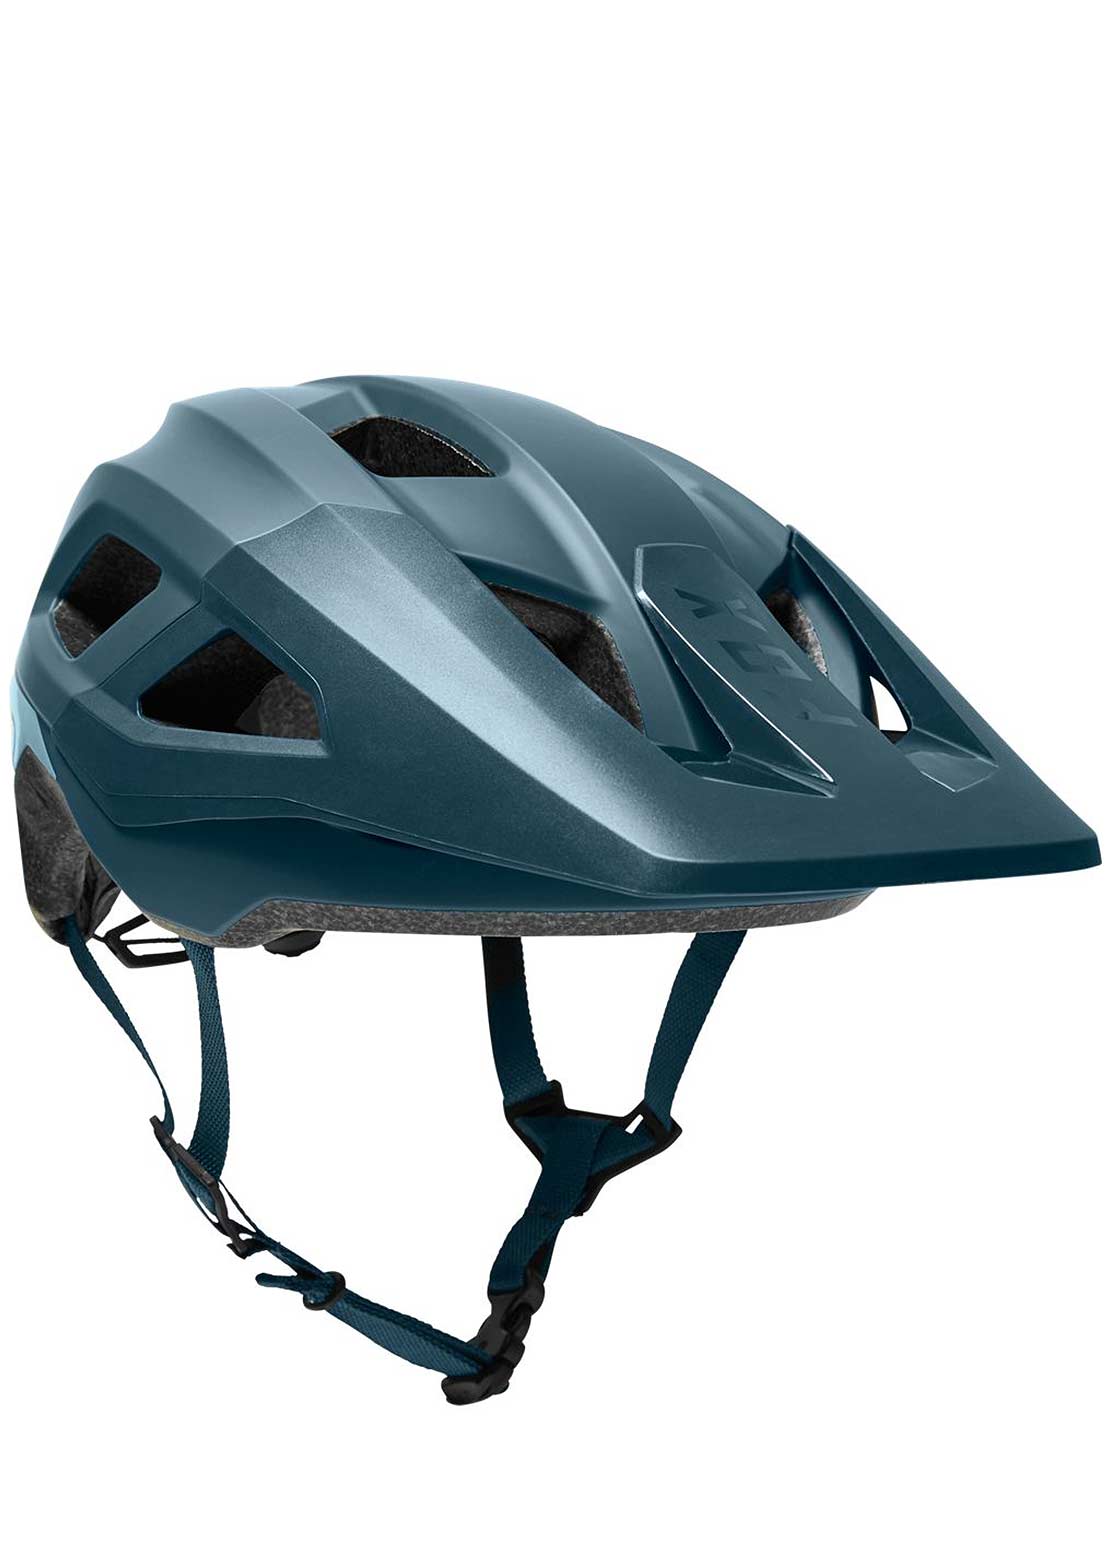 Fox Mainframe TRVRS Mountain Bike Helmet Slate Blue